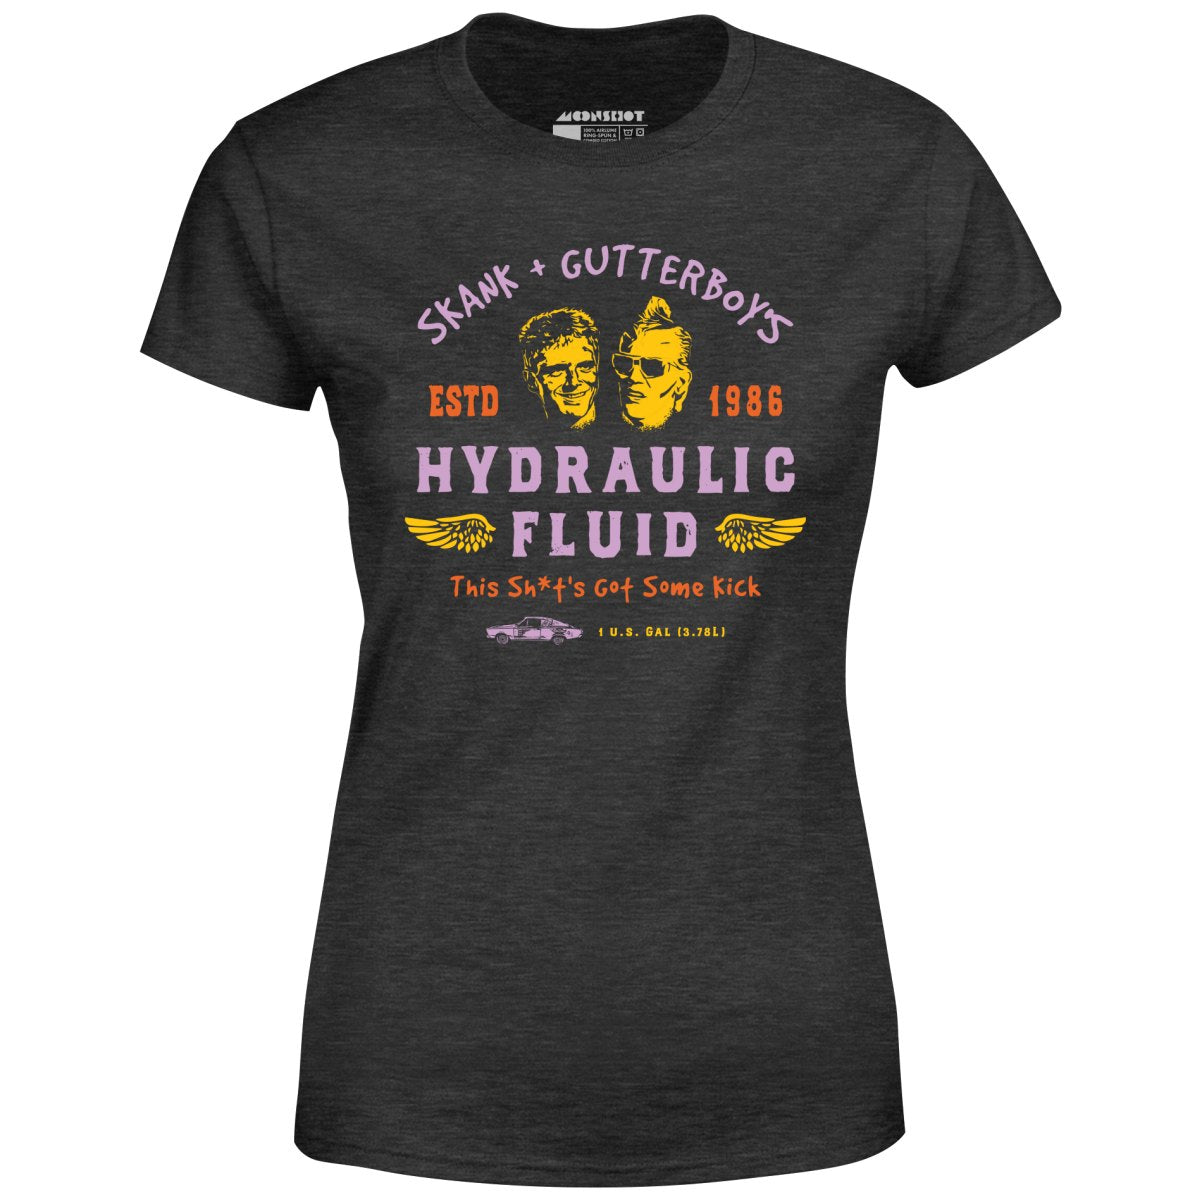 The Wraith - Skank & Gutterboy's Hydraulic Fluid - Women's T-Shirt